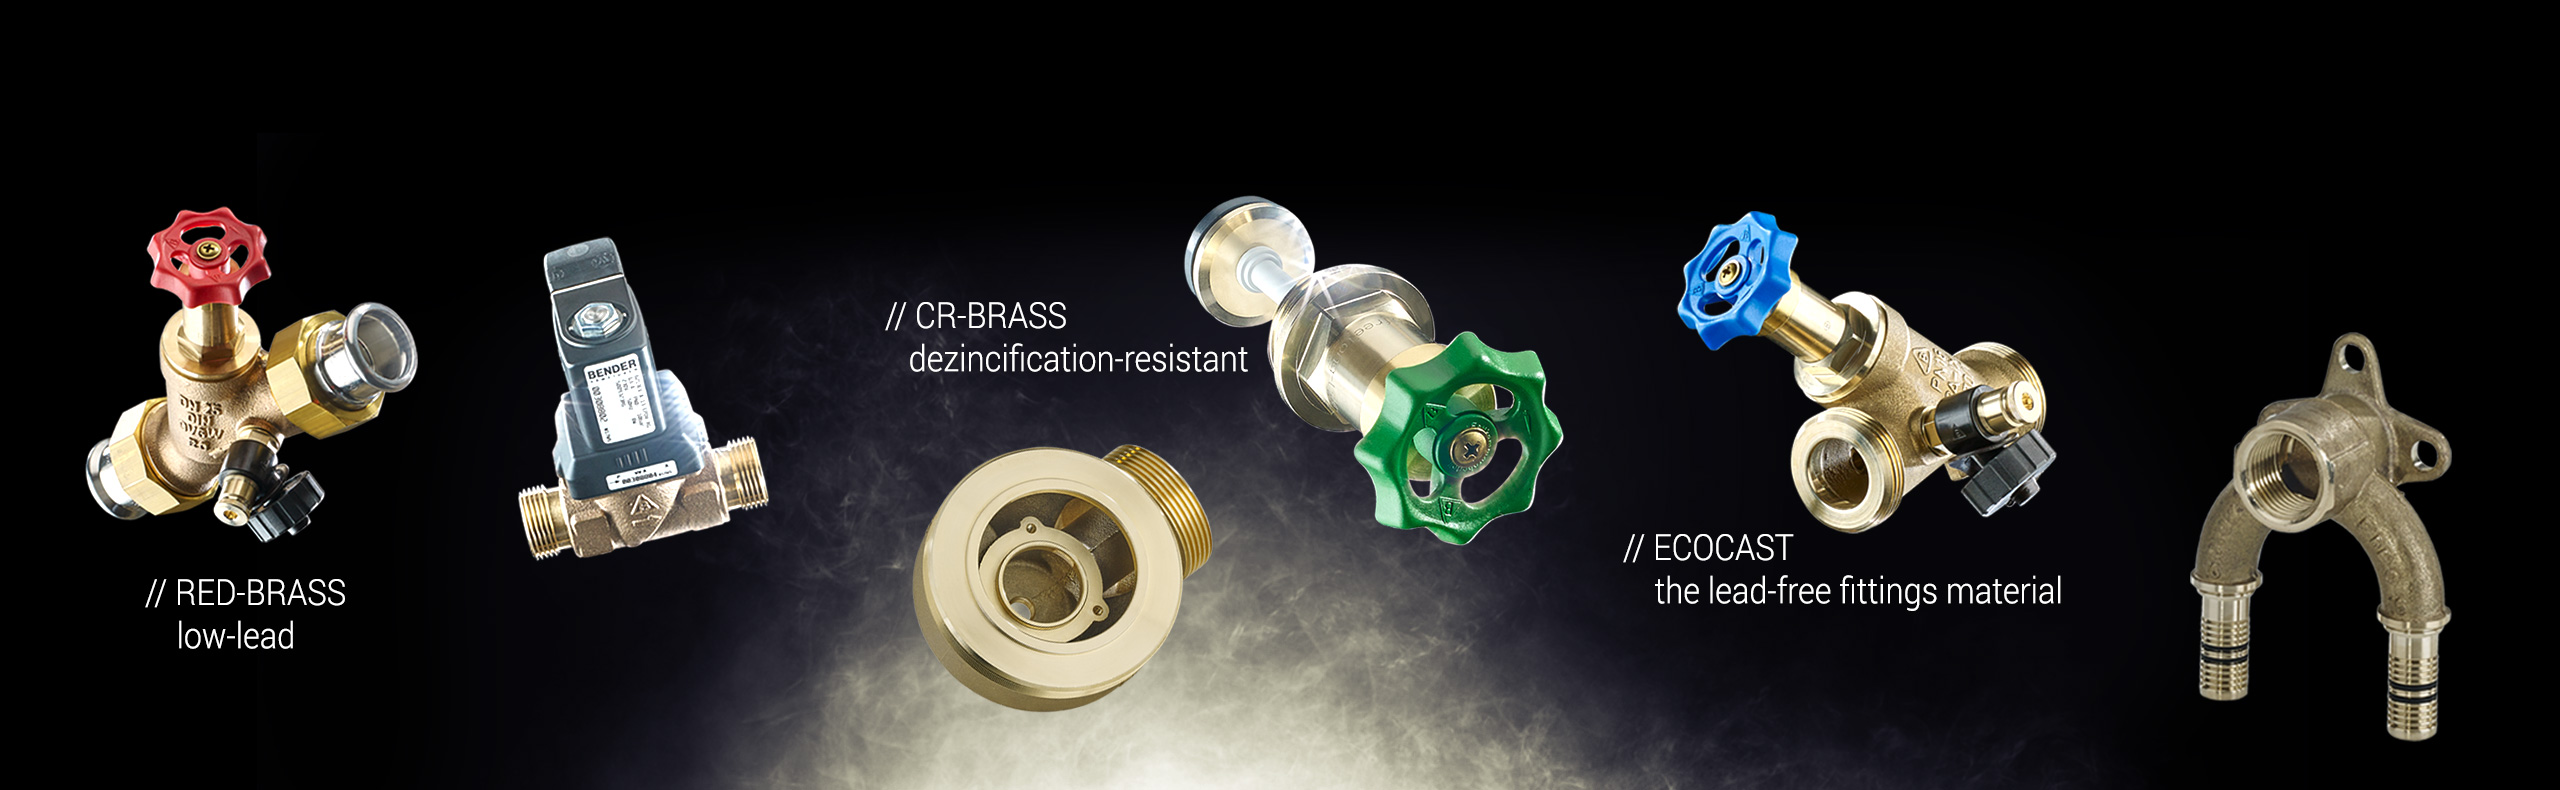 Brass, RedBrass and Ecocast Armatures for OEM Original Equipment Manufacturers